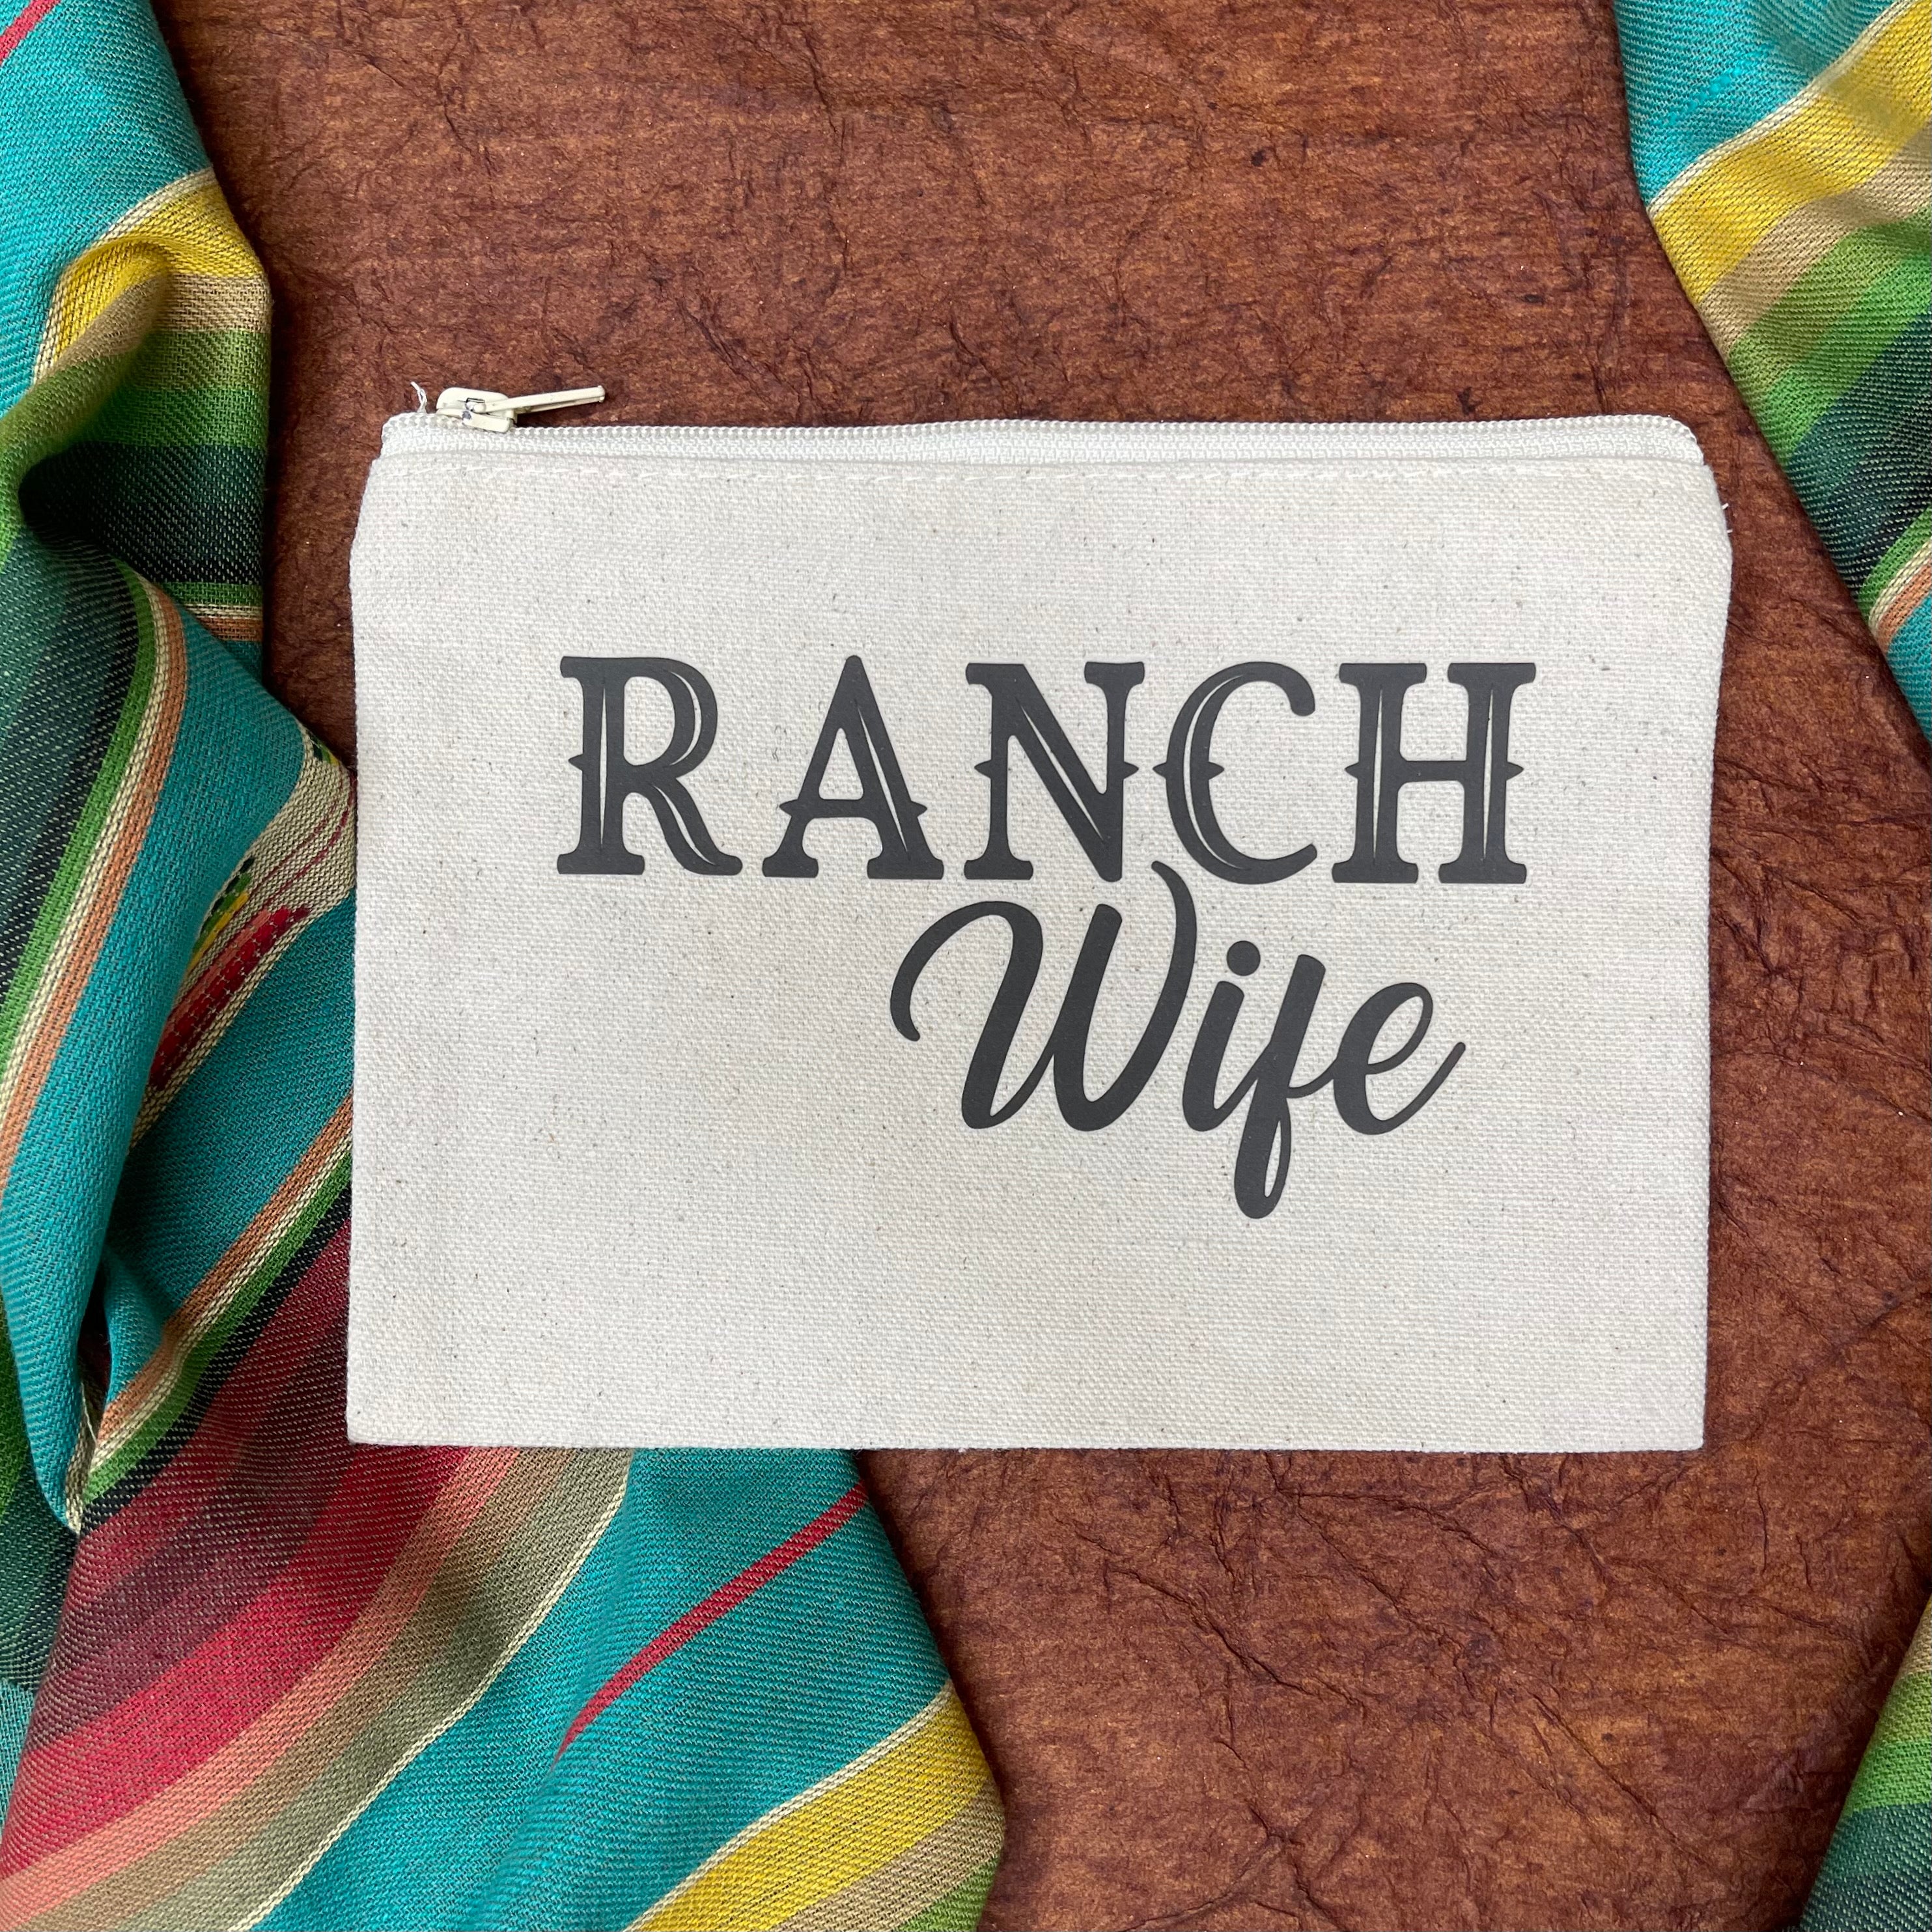 The “Ranch Wife” Ramblin Pouch